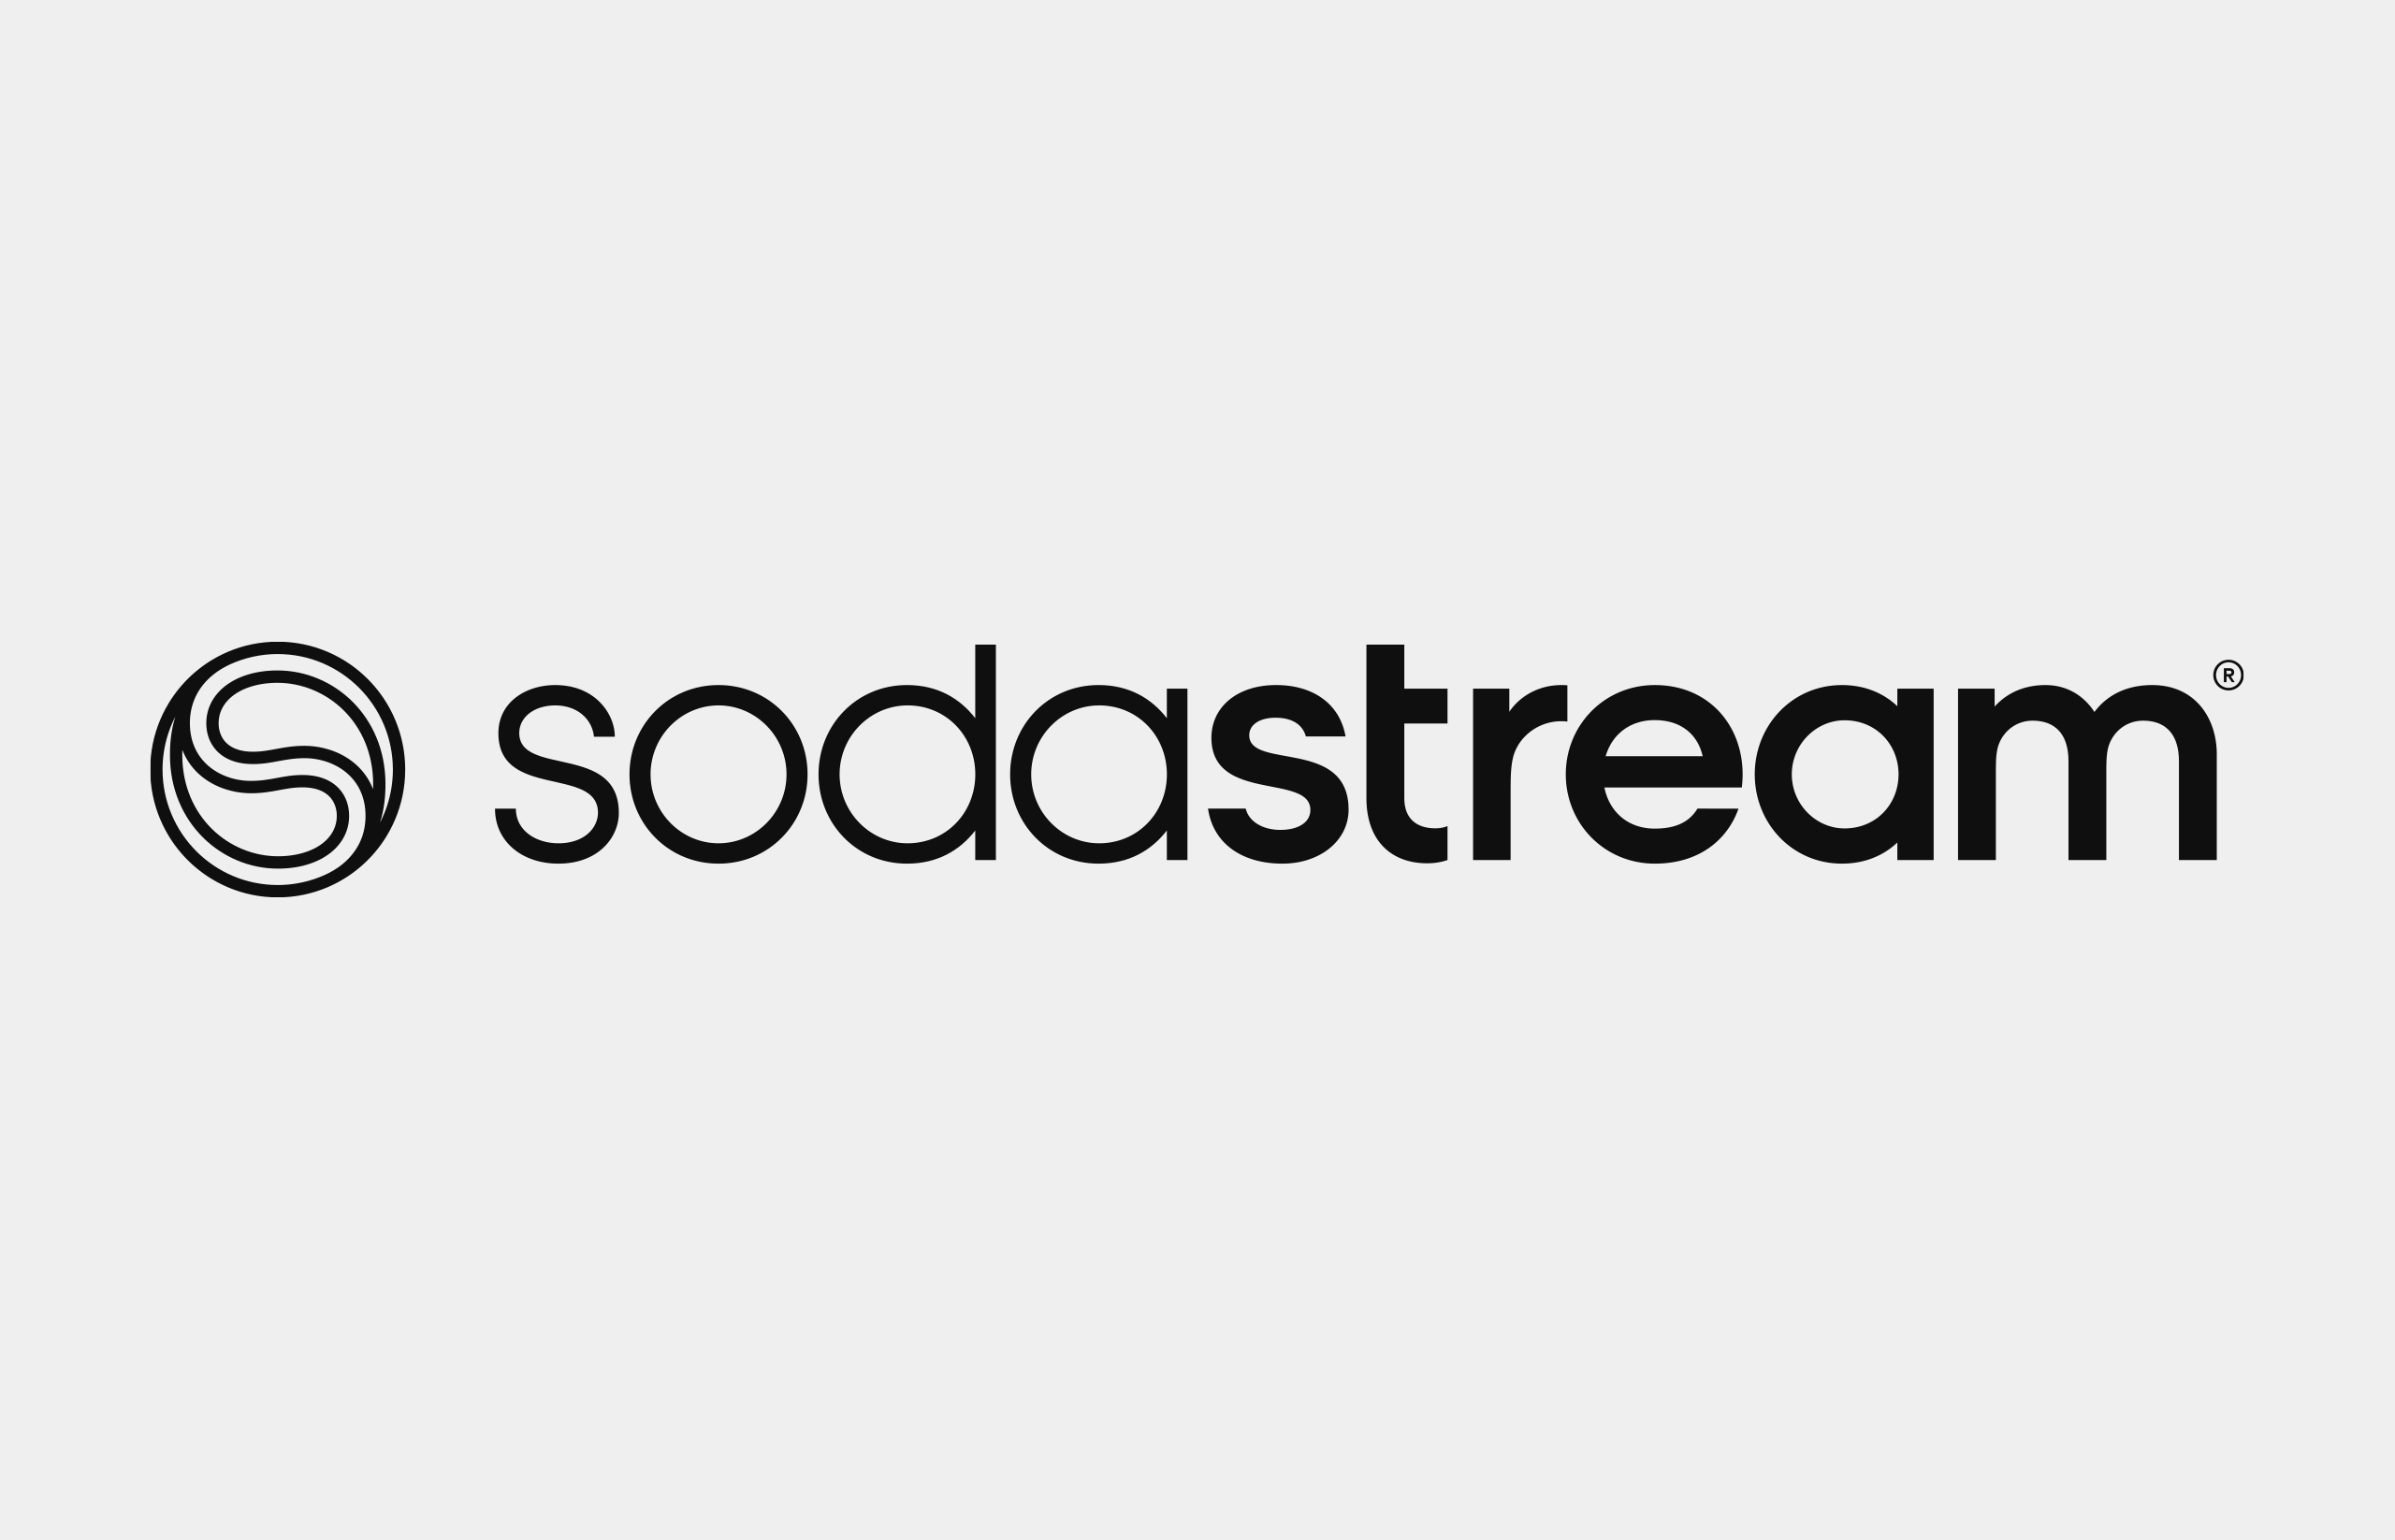 Sodastream Wordmark & Symbol (art direction by Pearlfisher) –